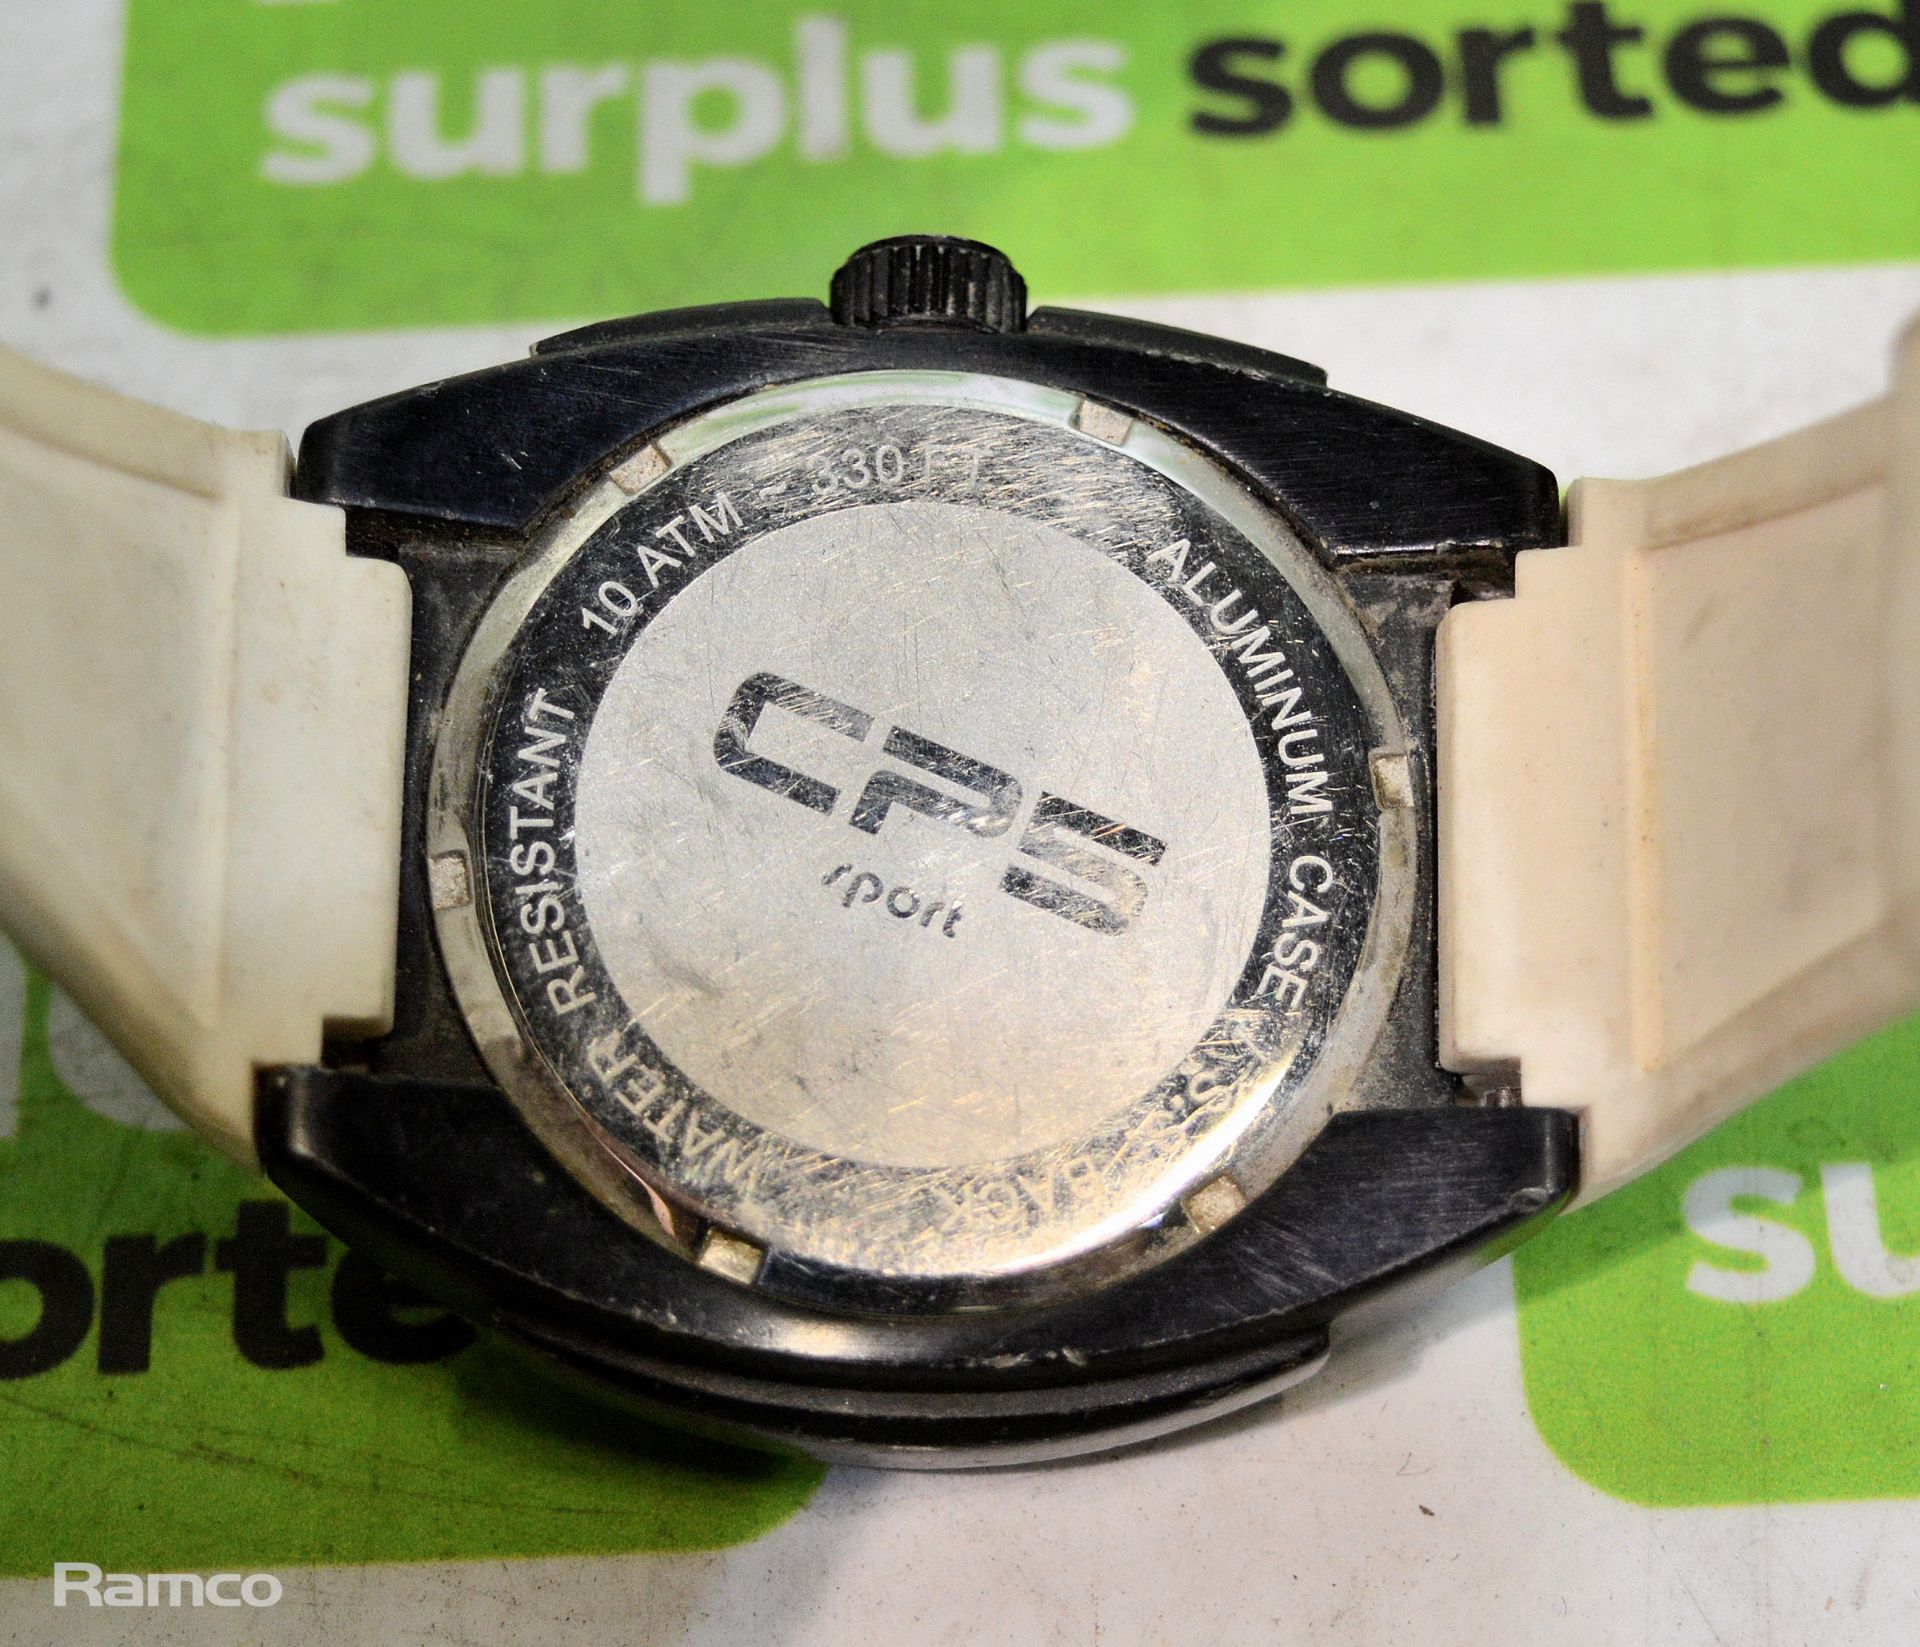 CP5 sport wrist watch - Image 2 of 4